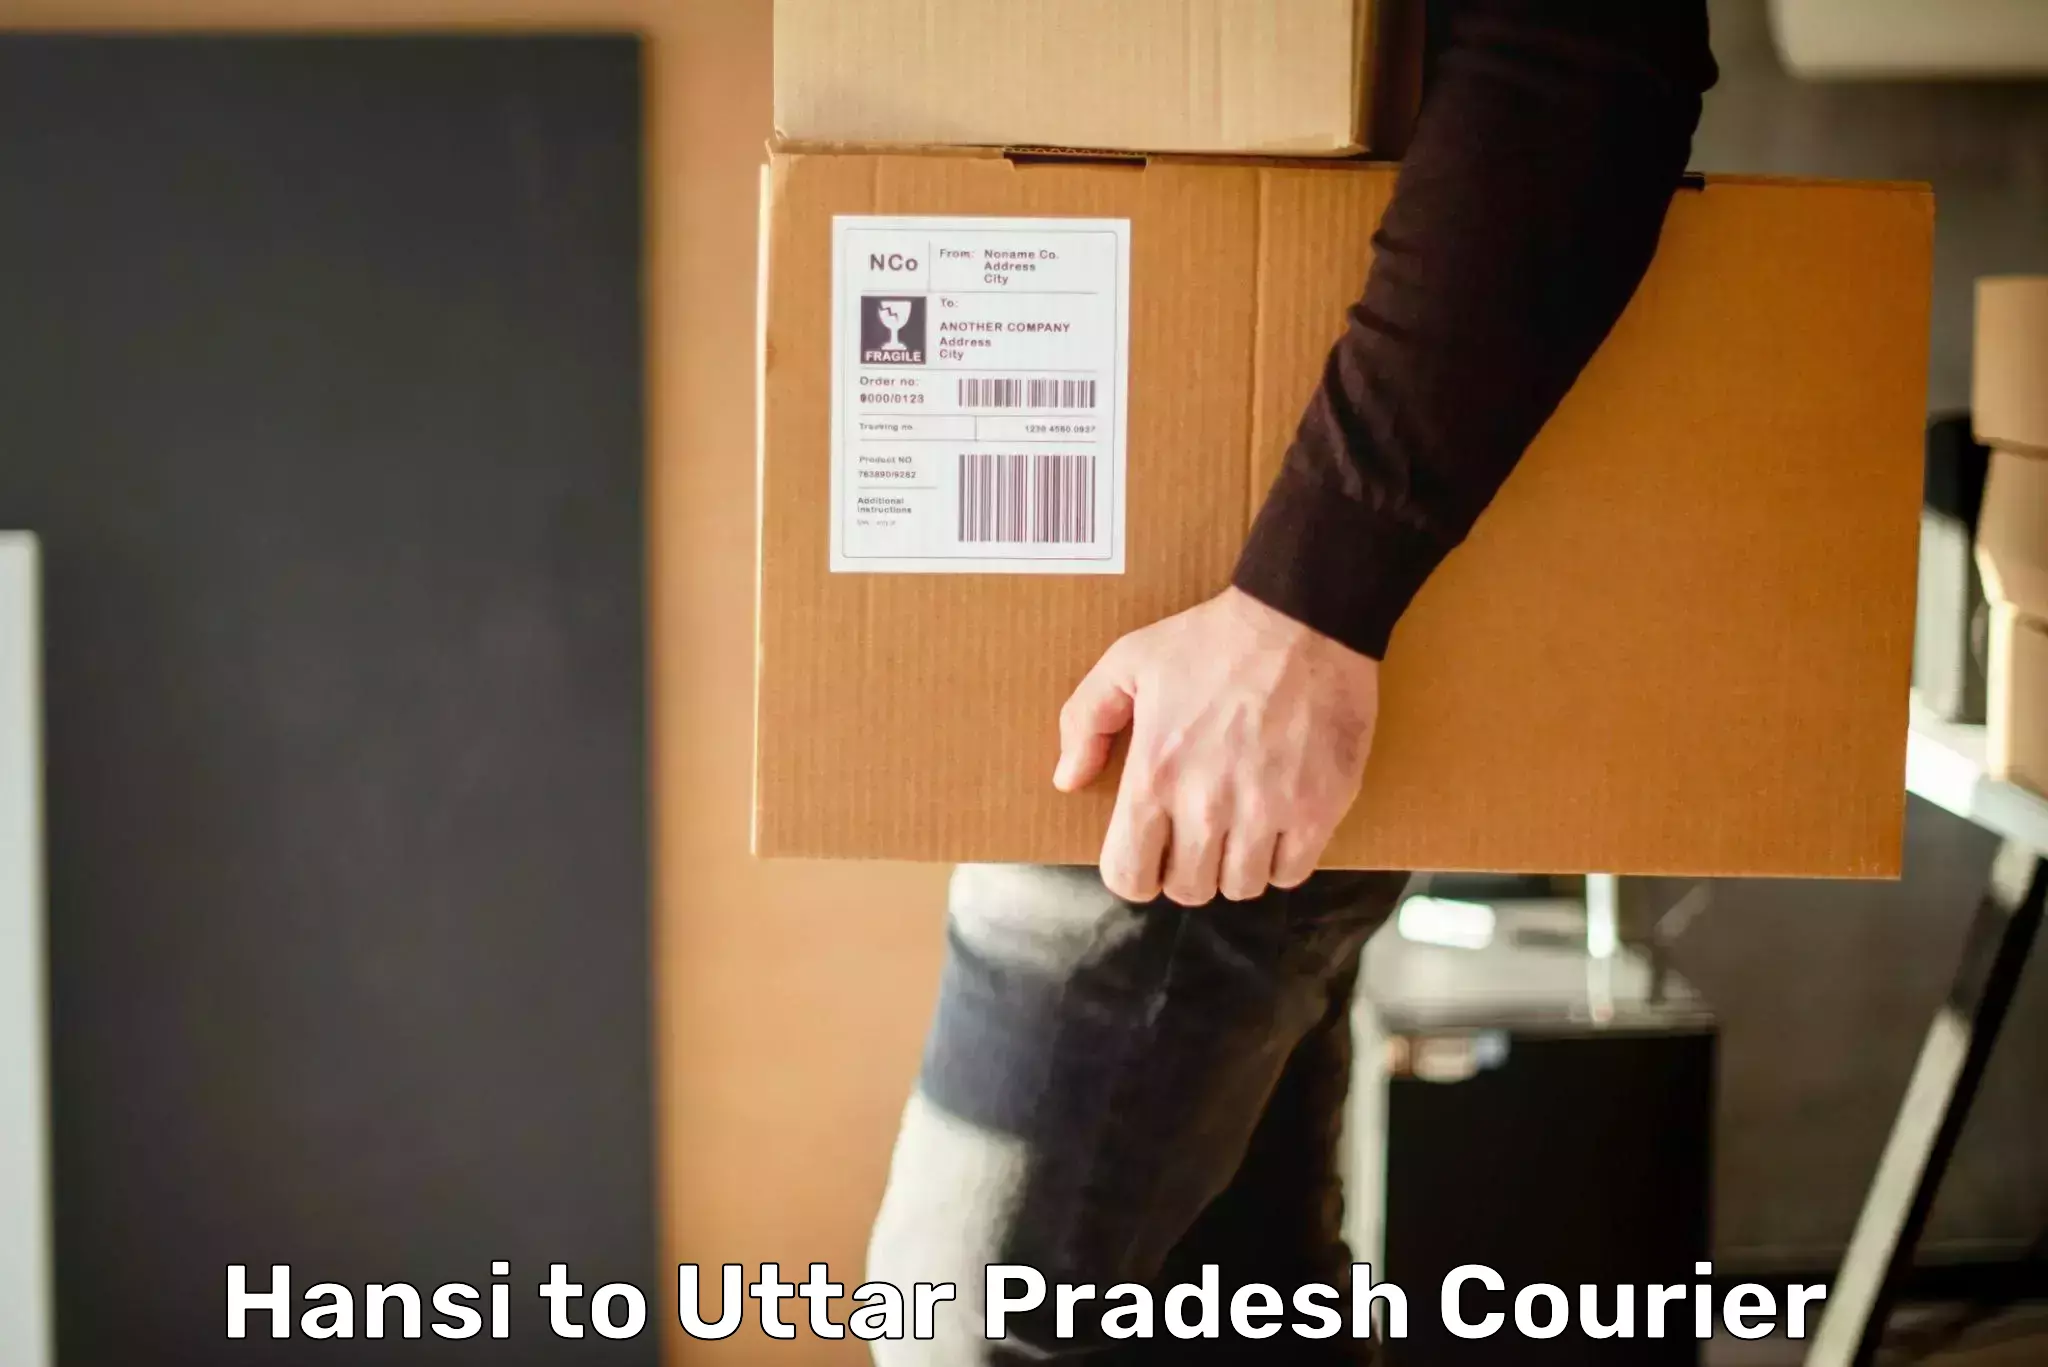 Fast delivery service Hansi to Uttar Pradesh